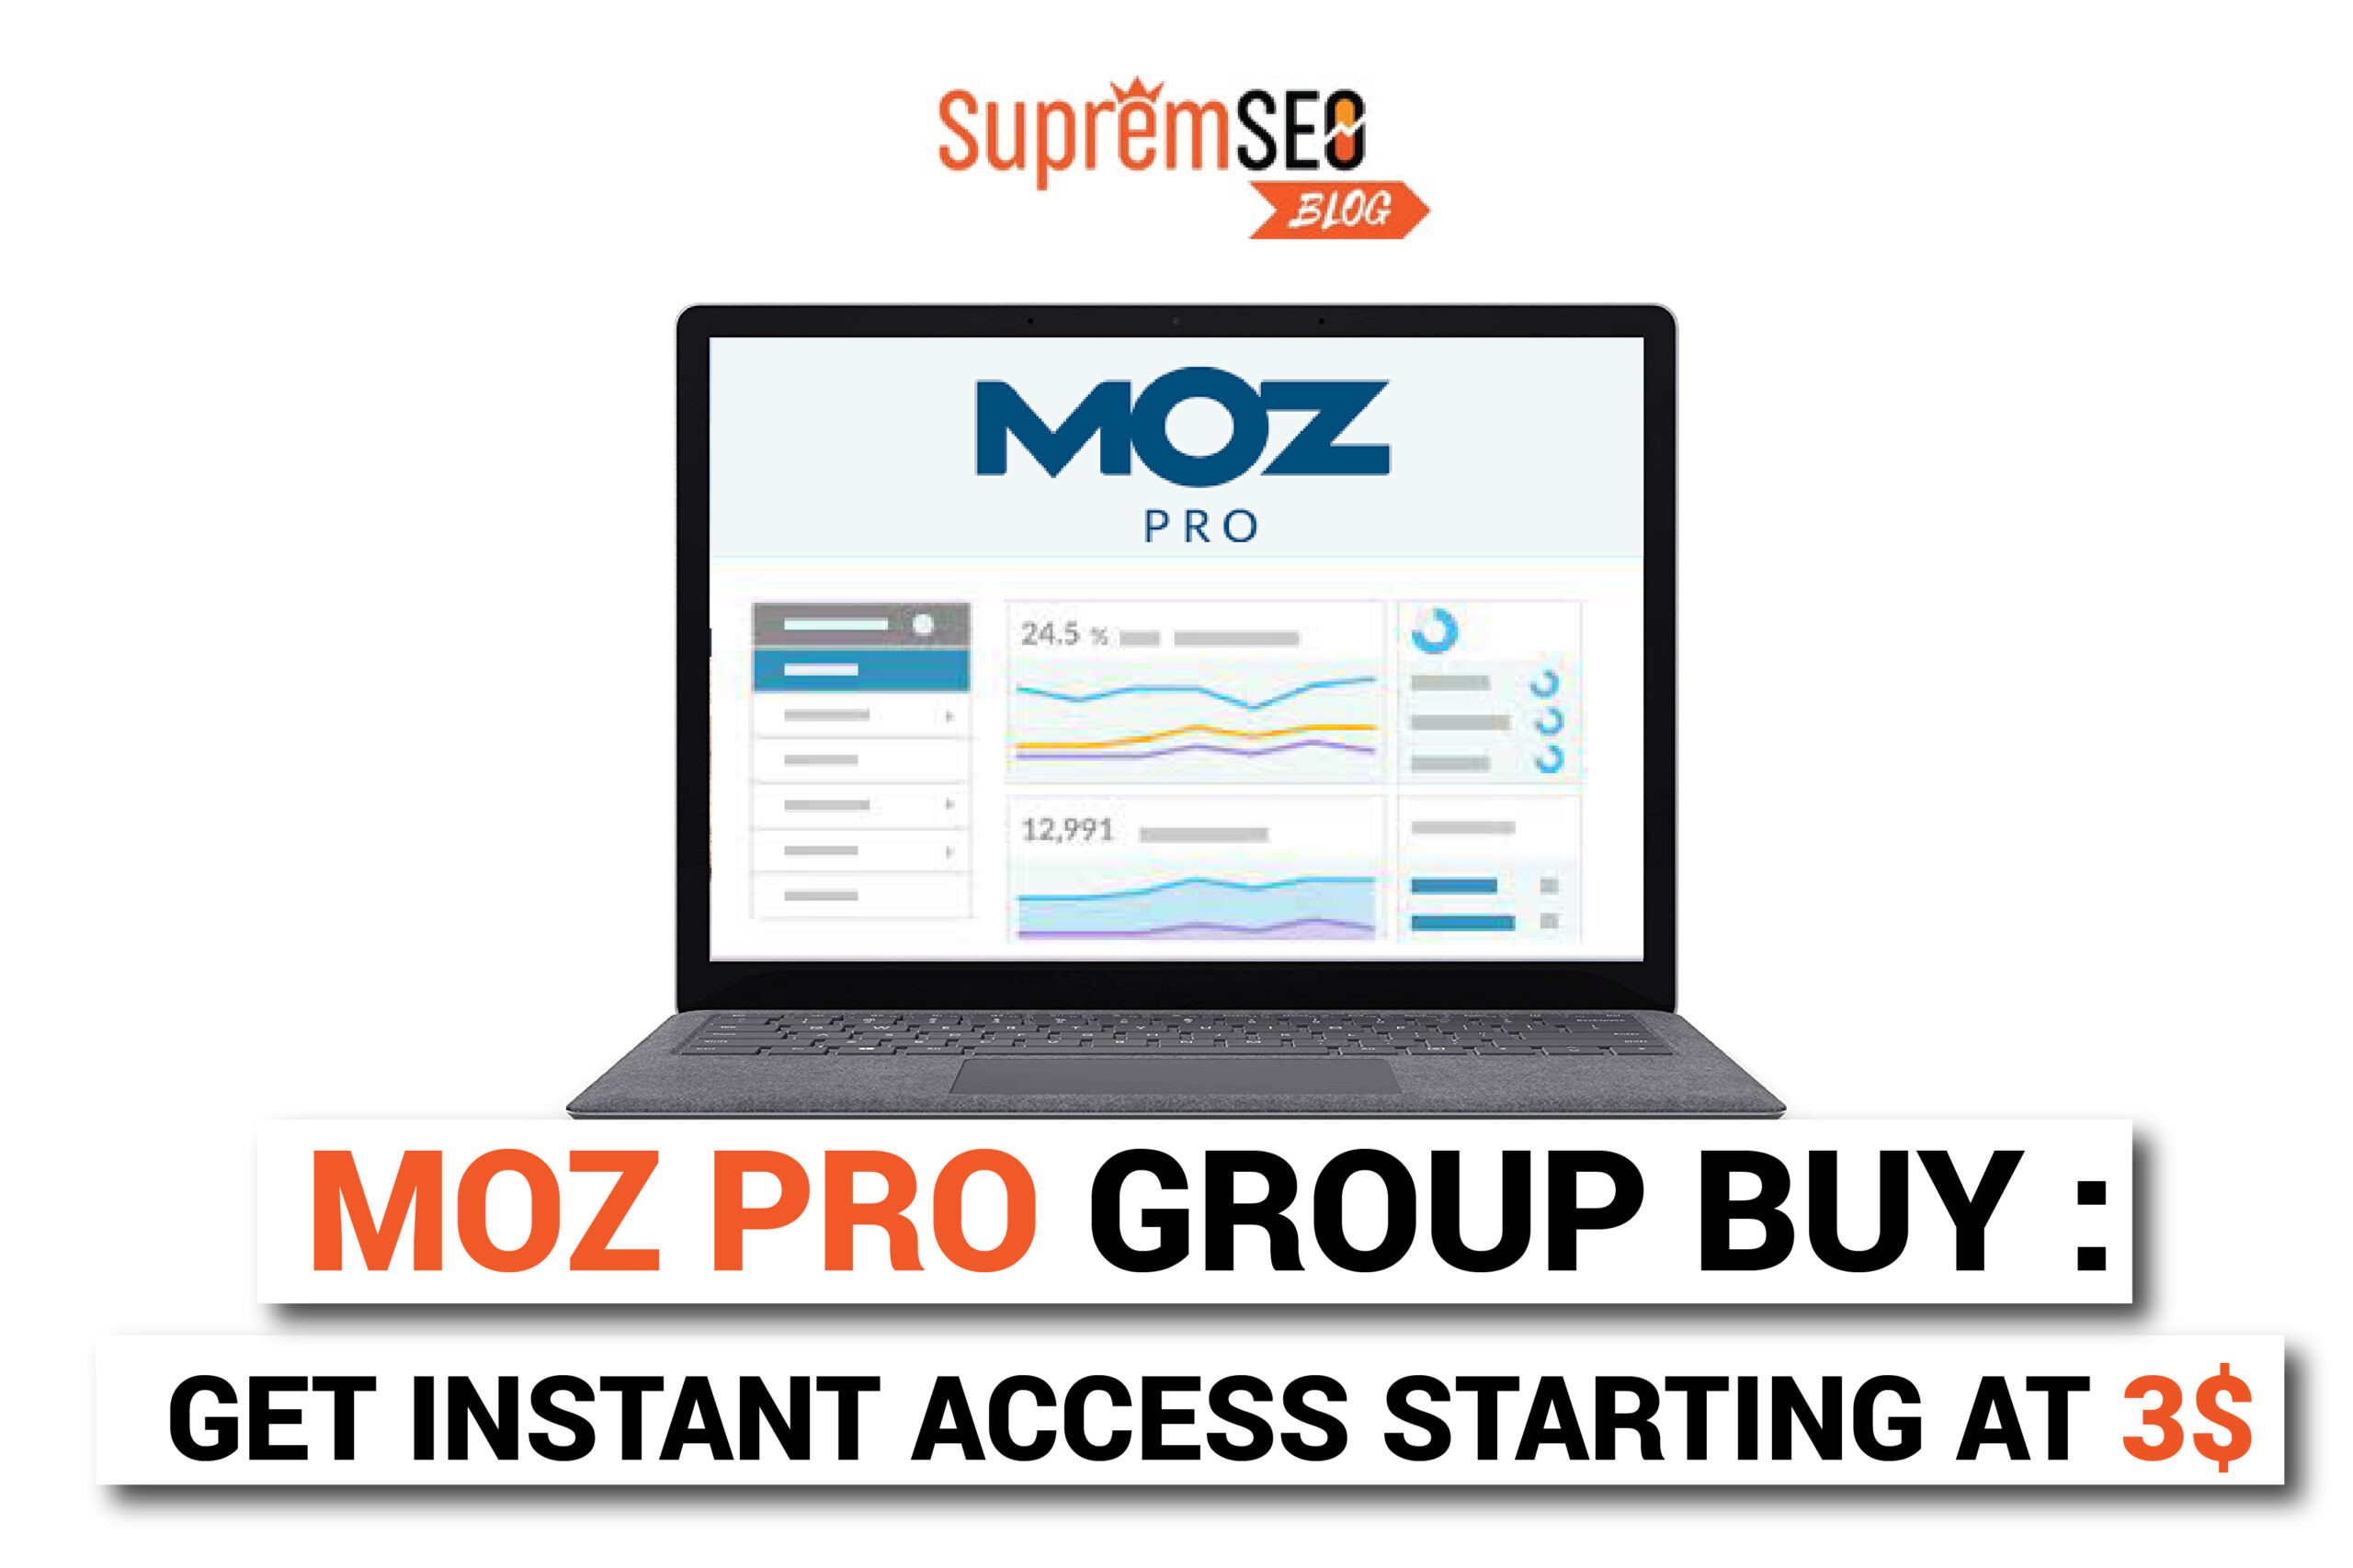 Moz Pro group buy